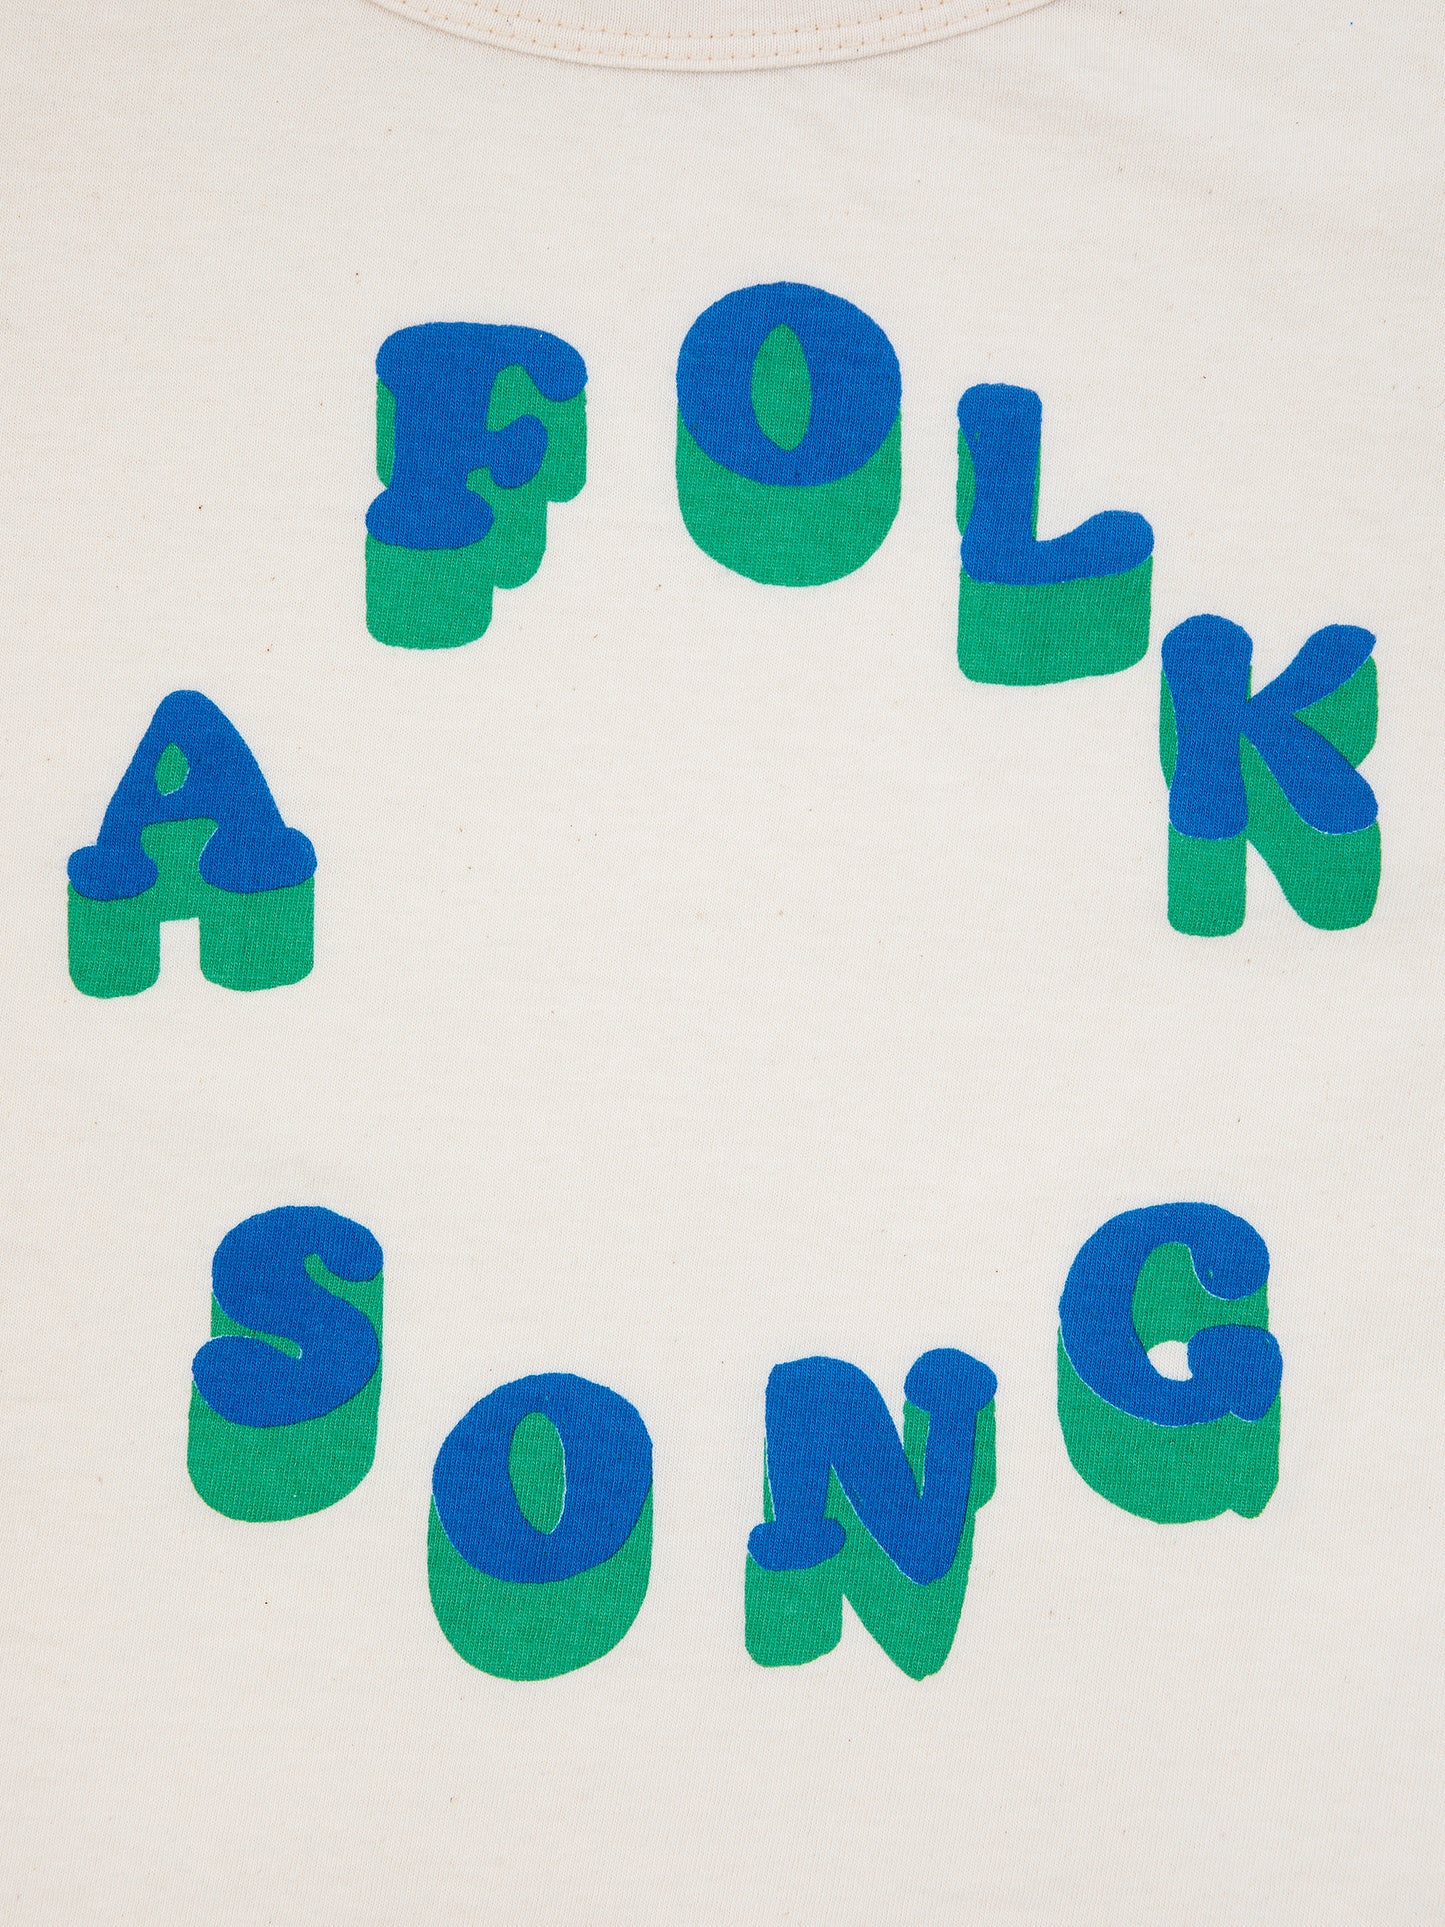 +Bobo Choses+ A Folk Song T-shirt